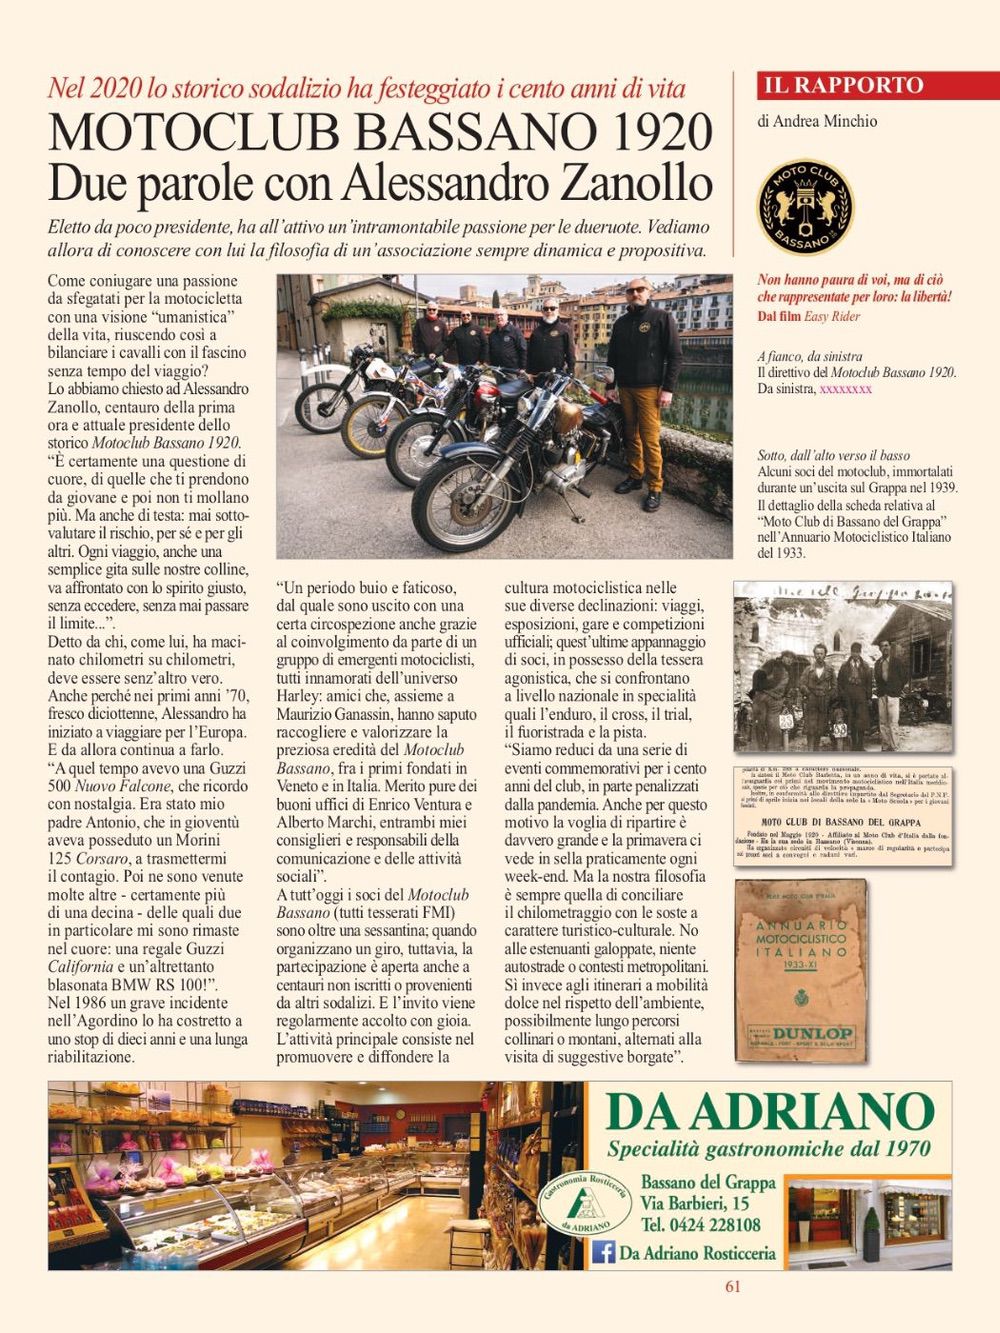 Moto Club Bassano